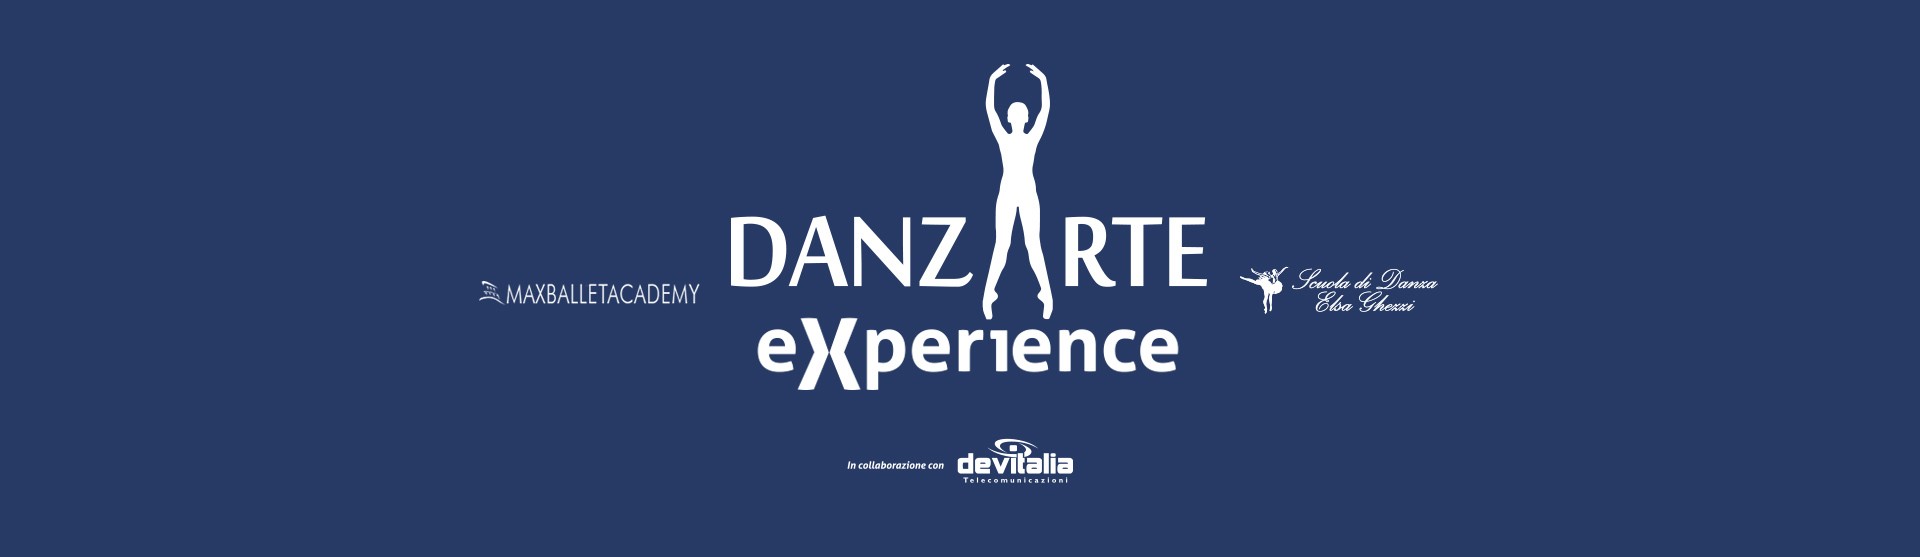 DanzArte eXperience 2018